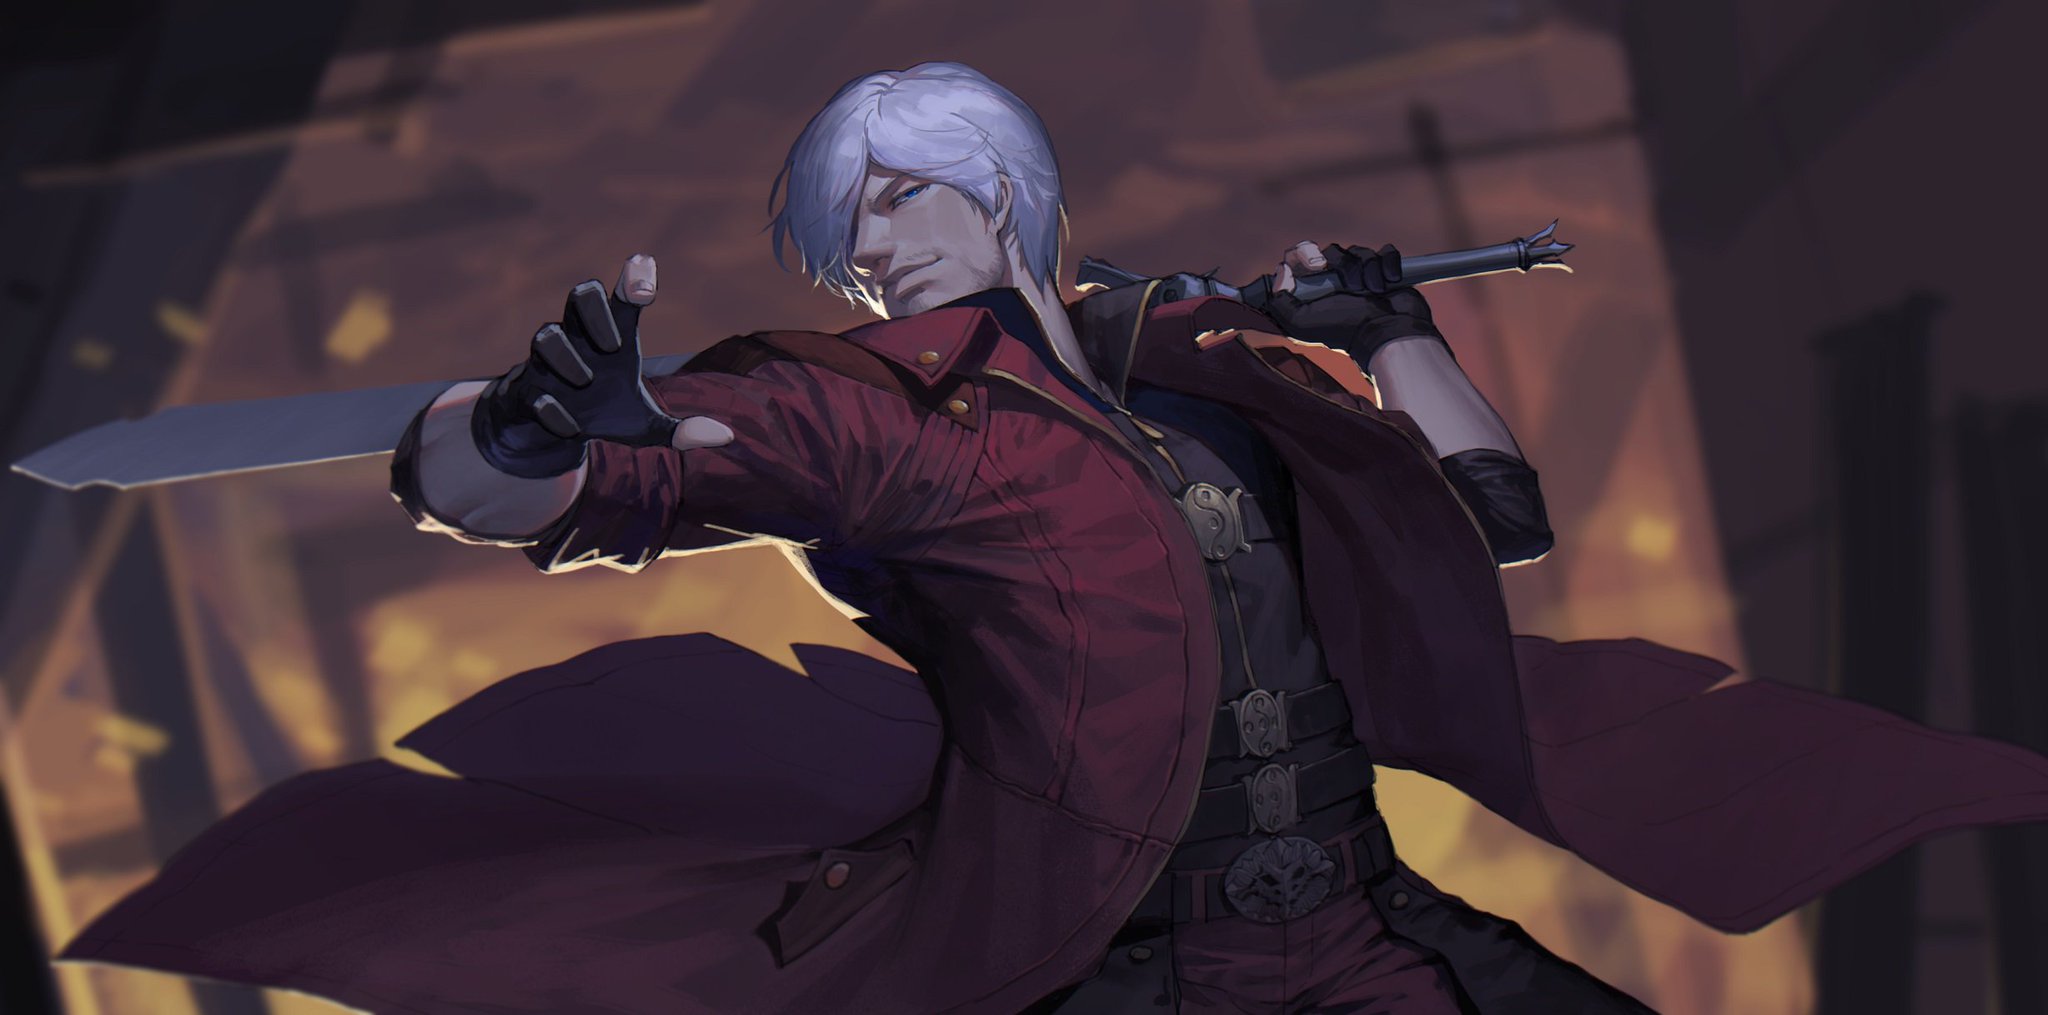 Dante/#1628305, Fullsize Image (700x990) - Zerochan